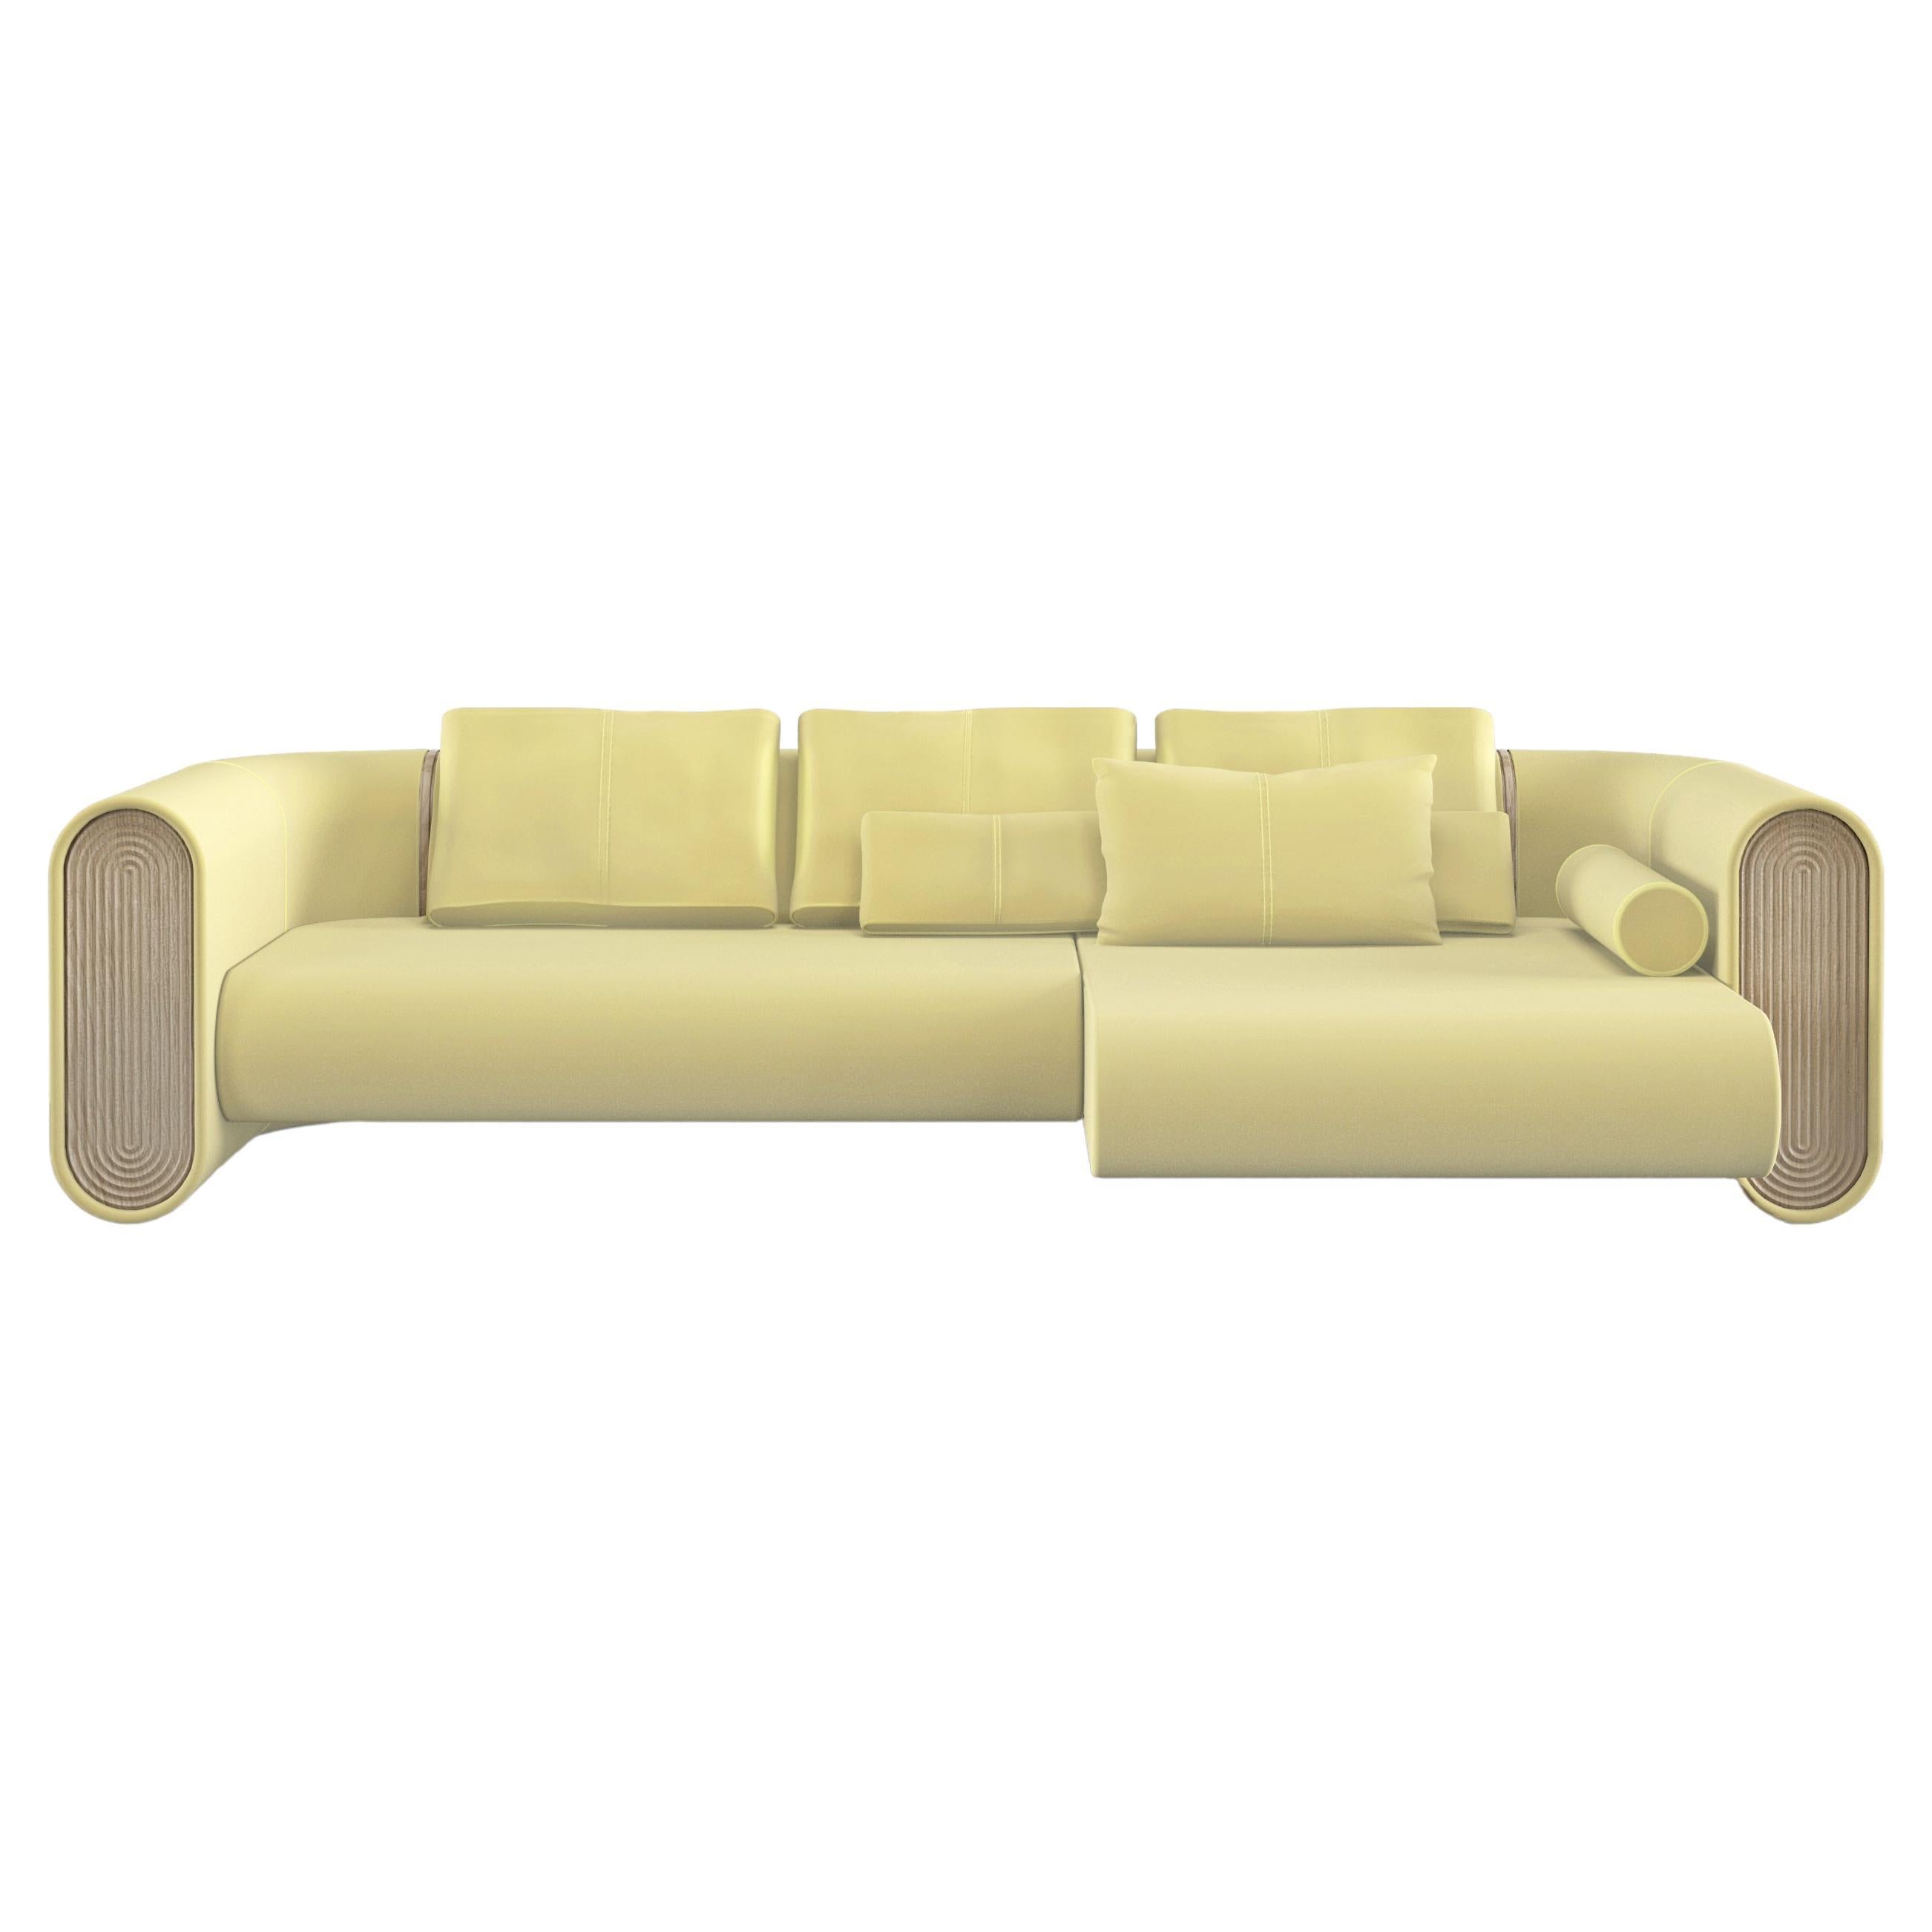 Union Sofa For Sale